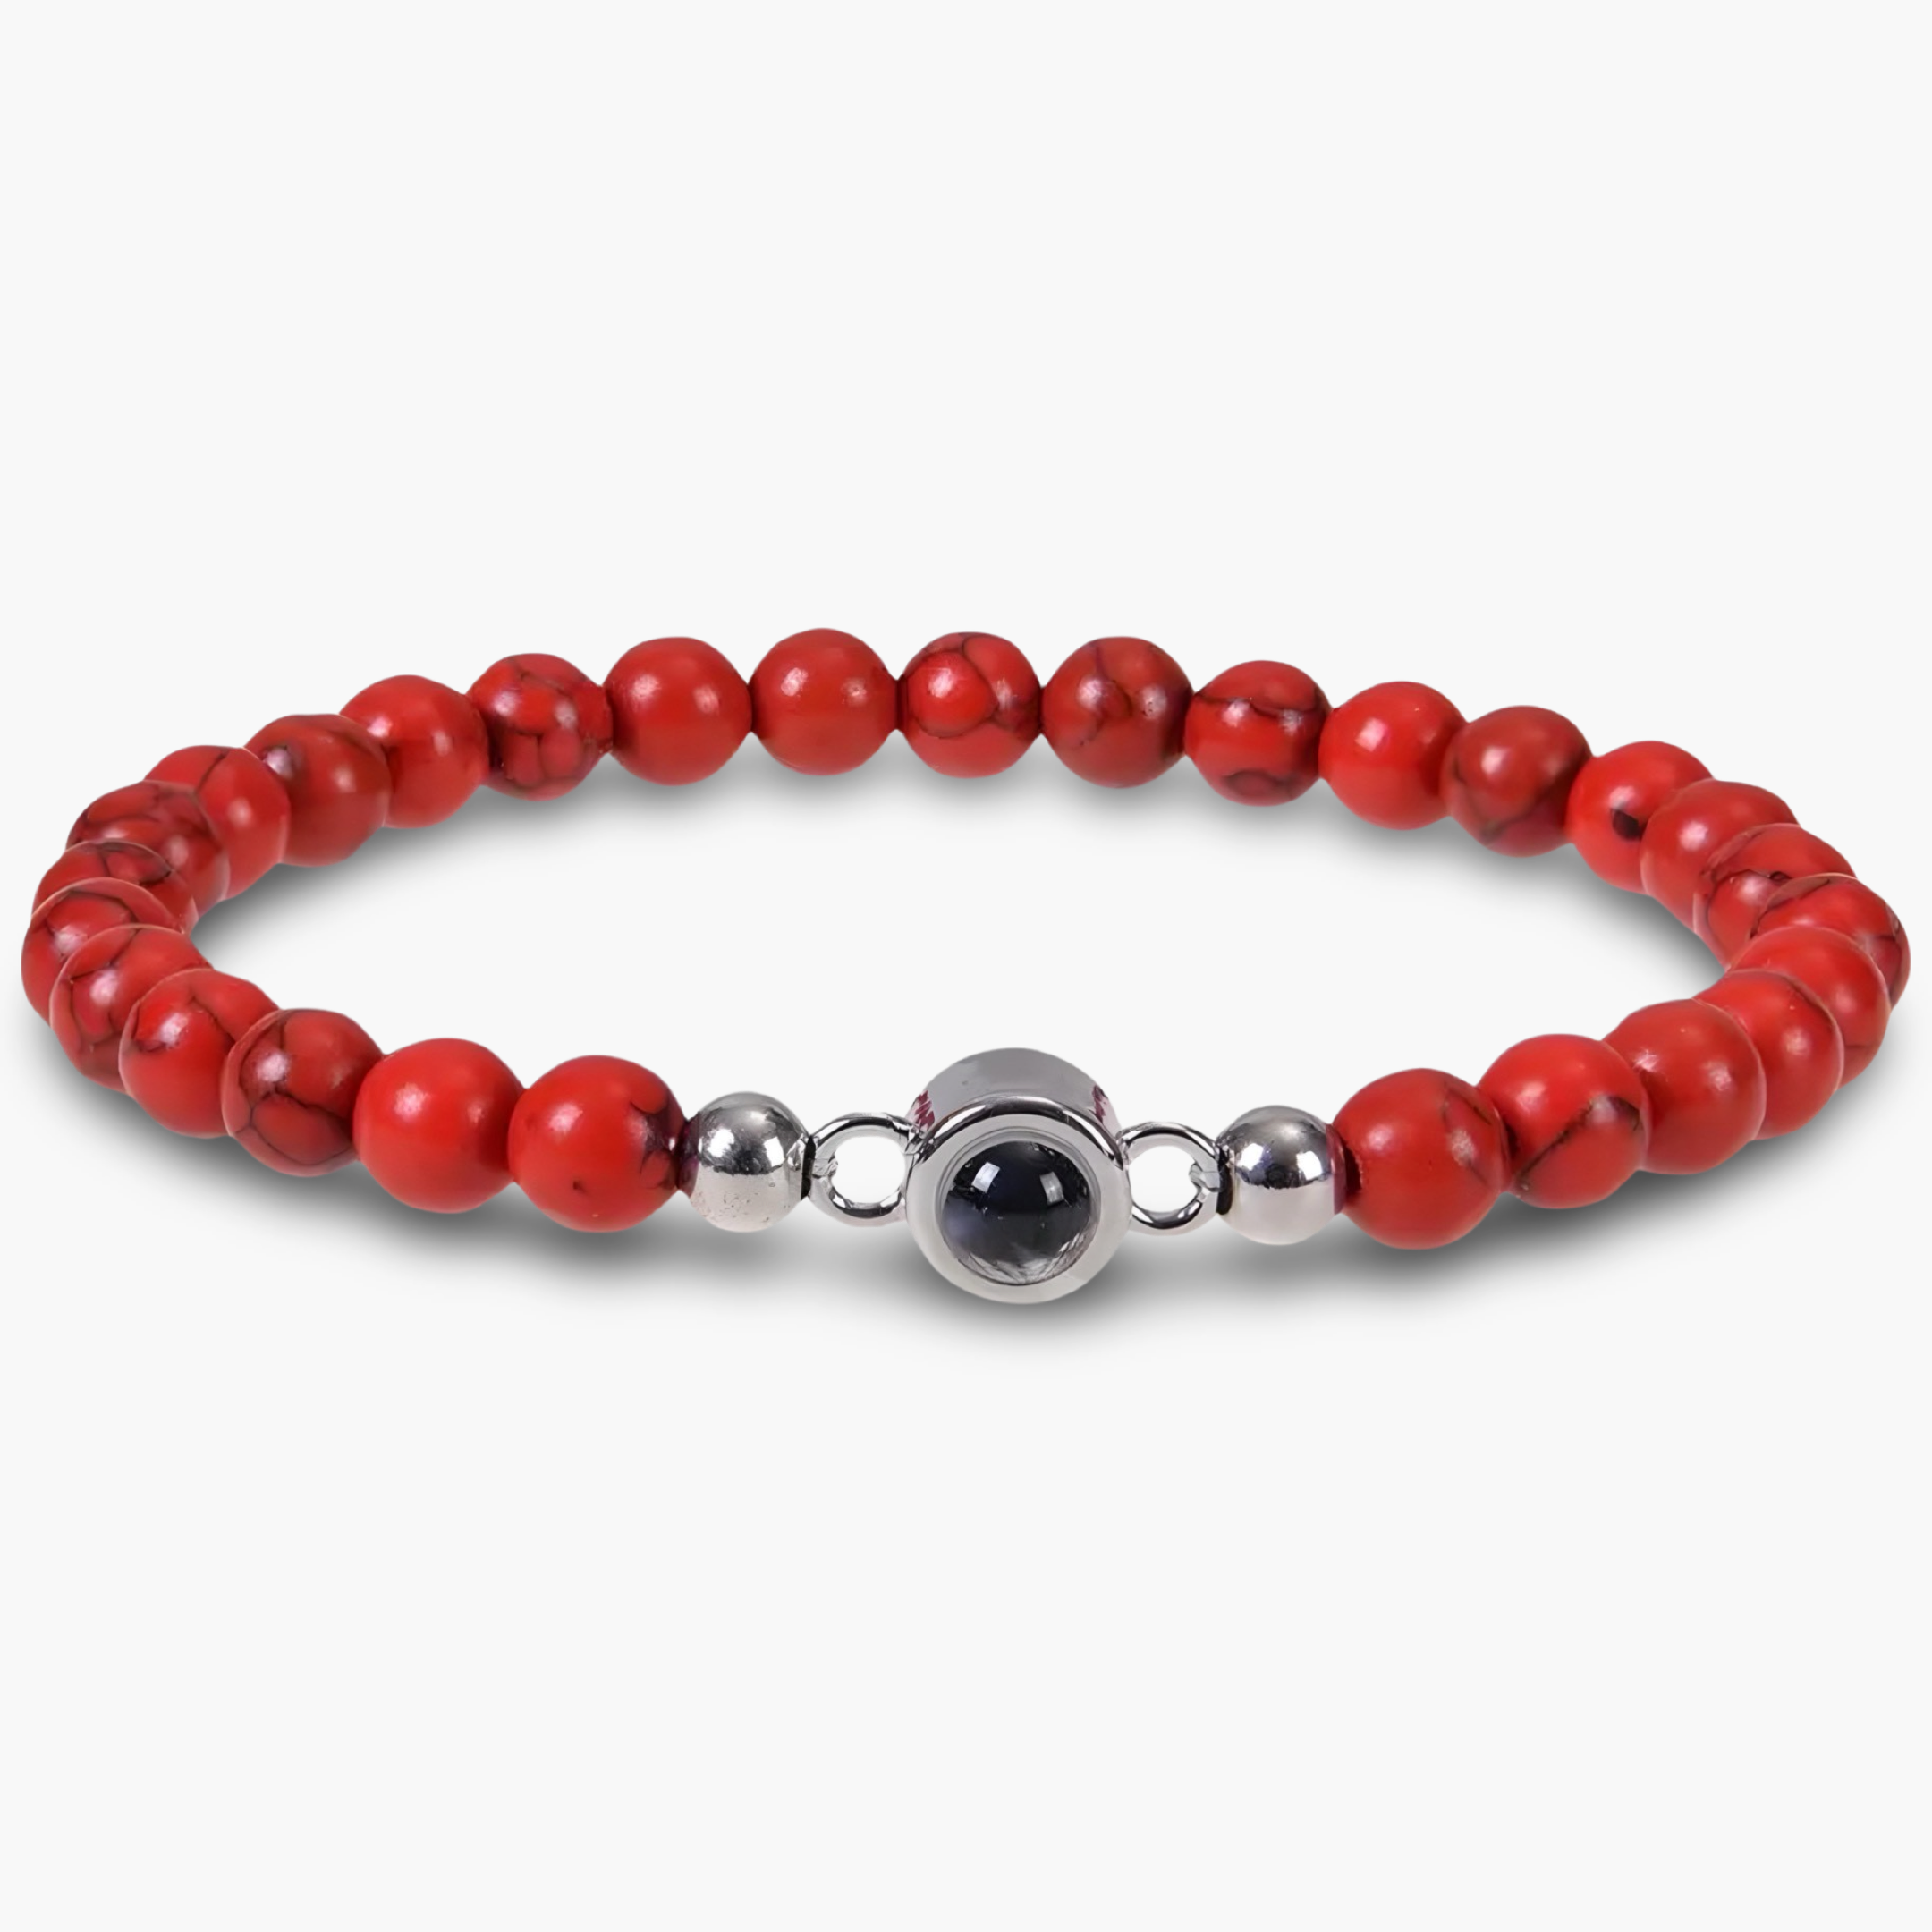 Personalized Beads Stone Bracelet